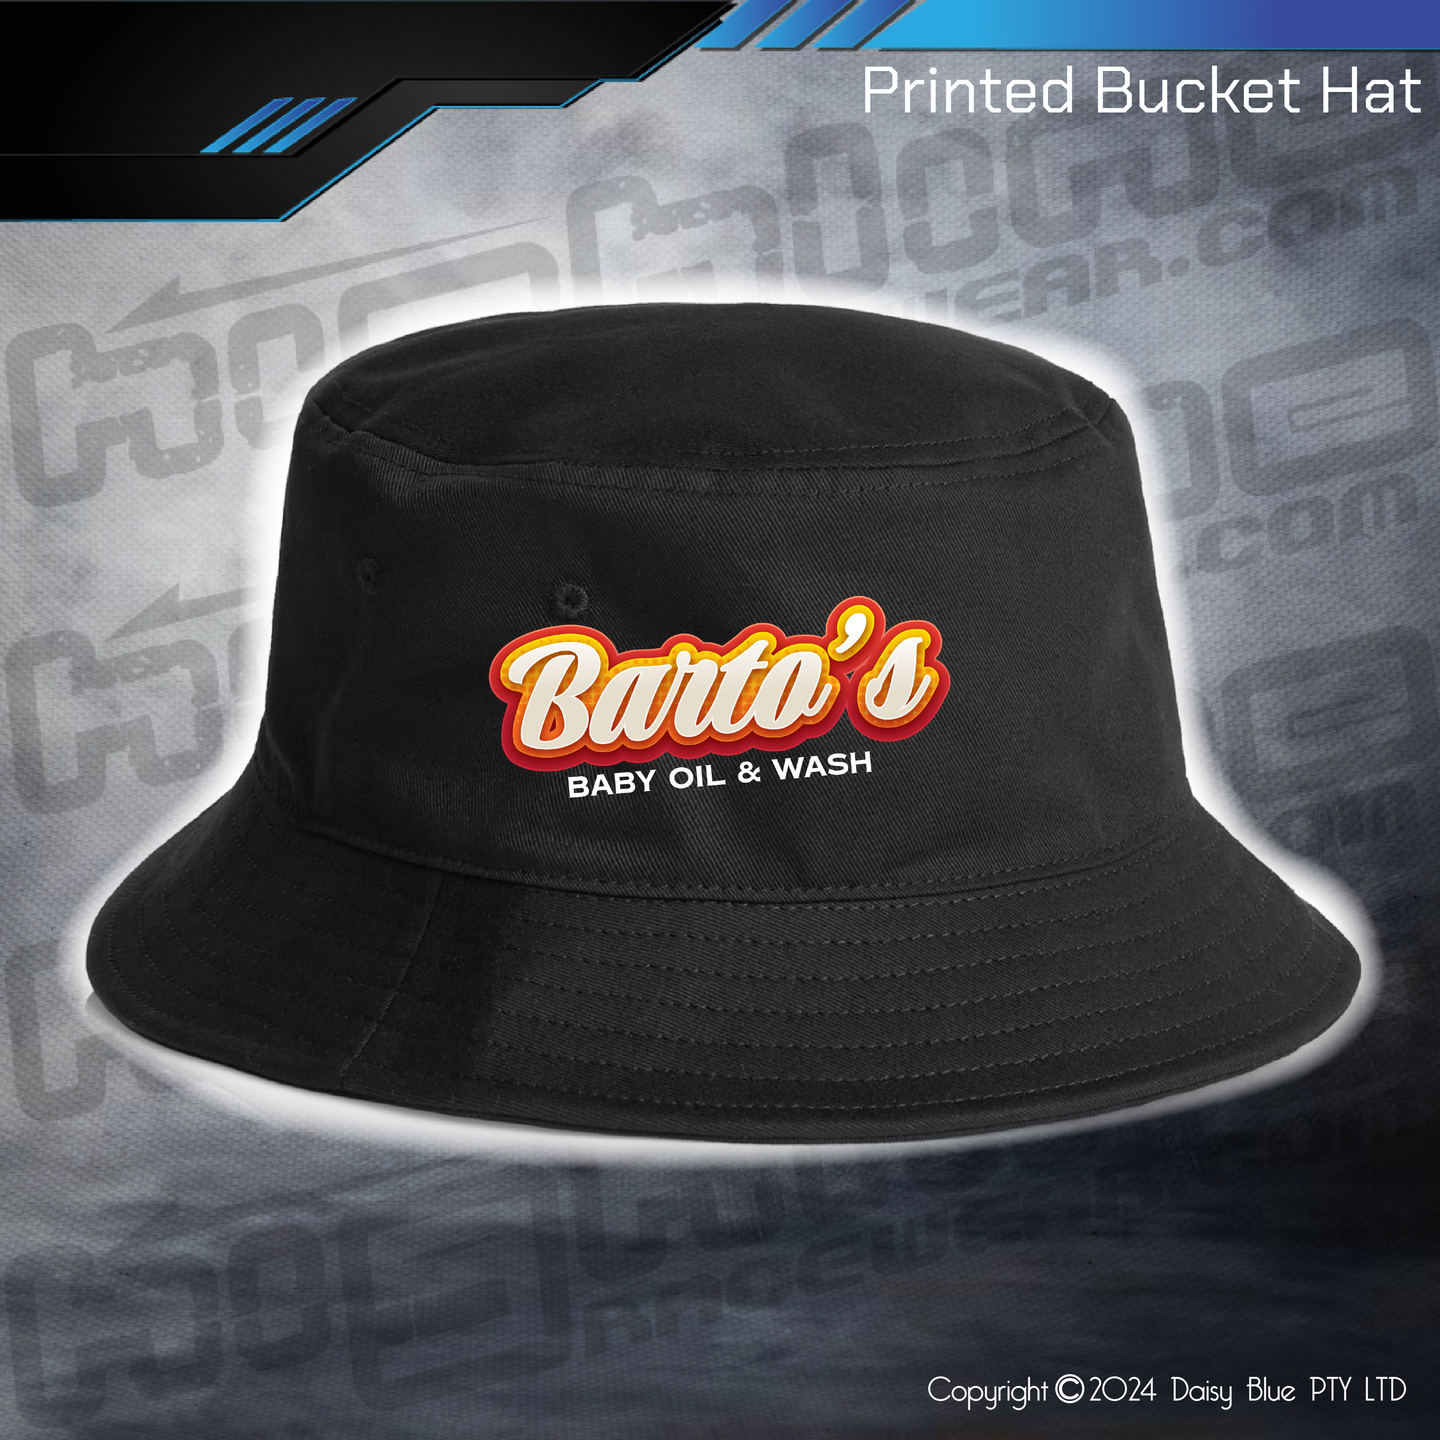 Printed Bucket Hat - Barto